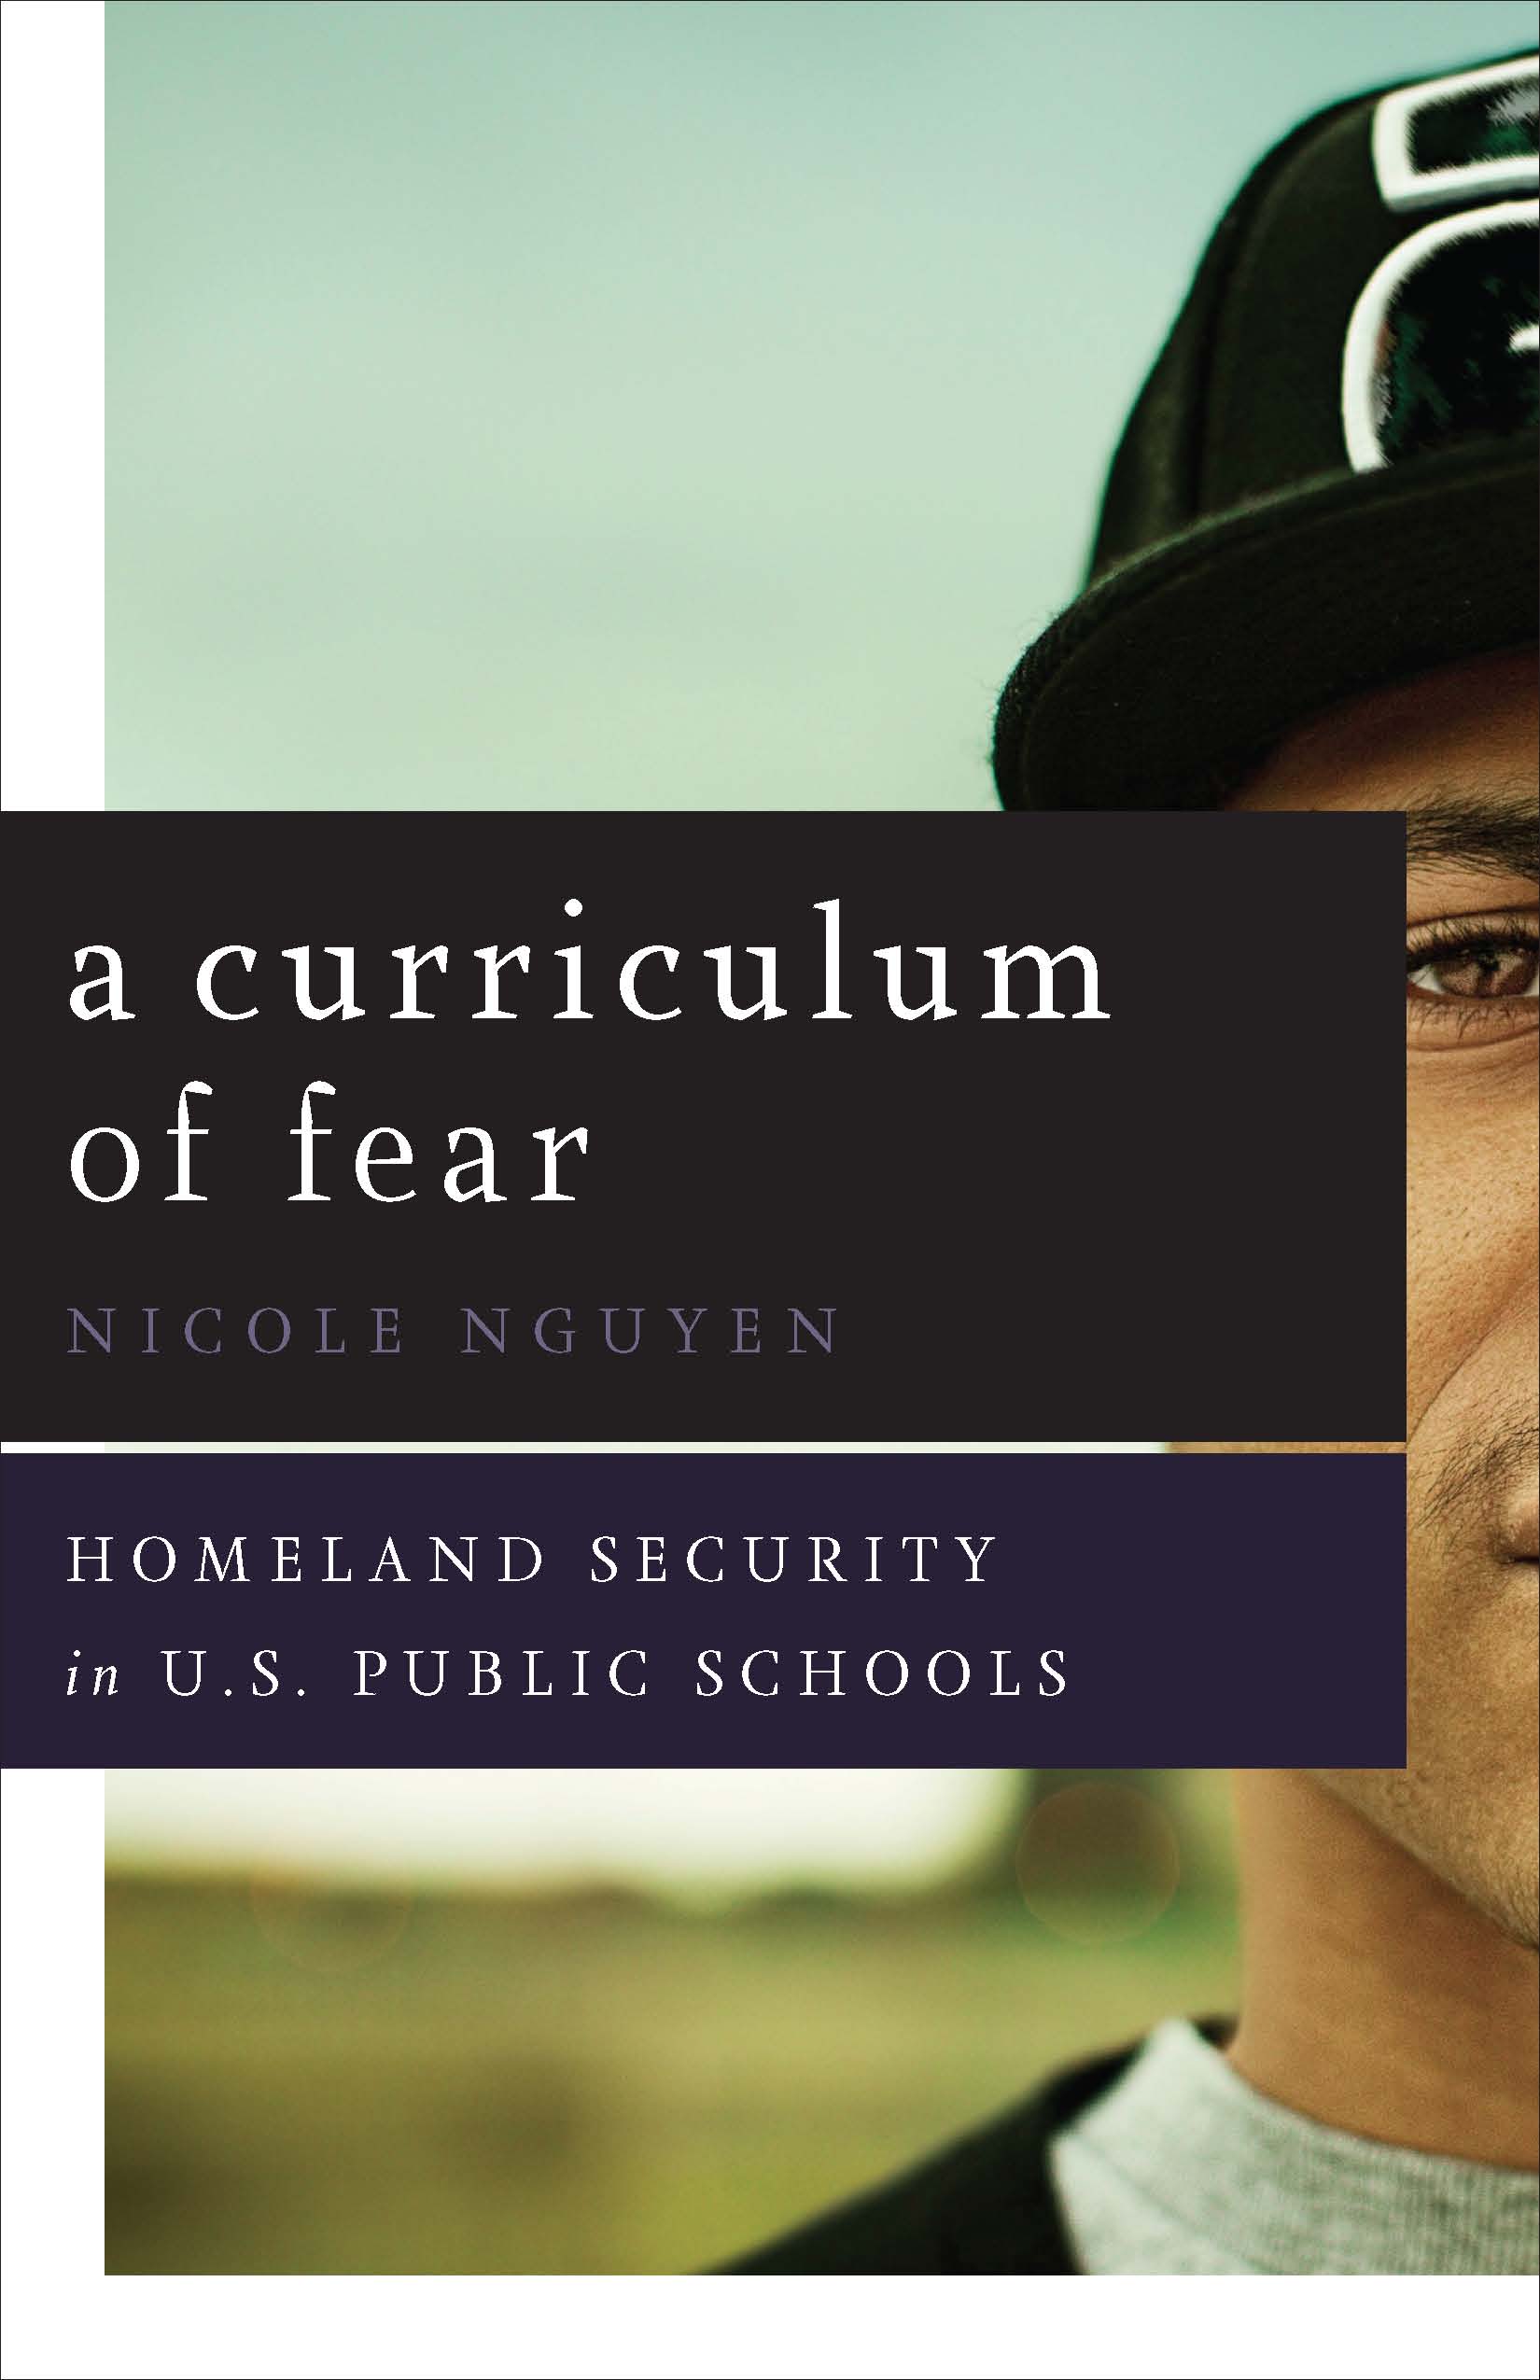 Curriculum of Fear